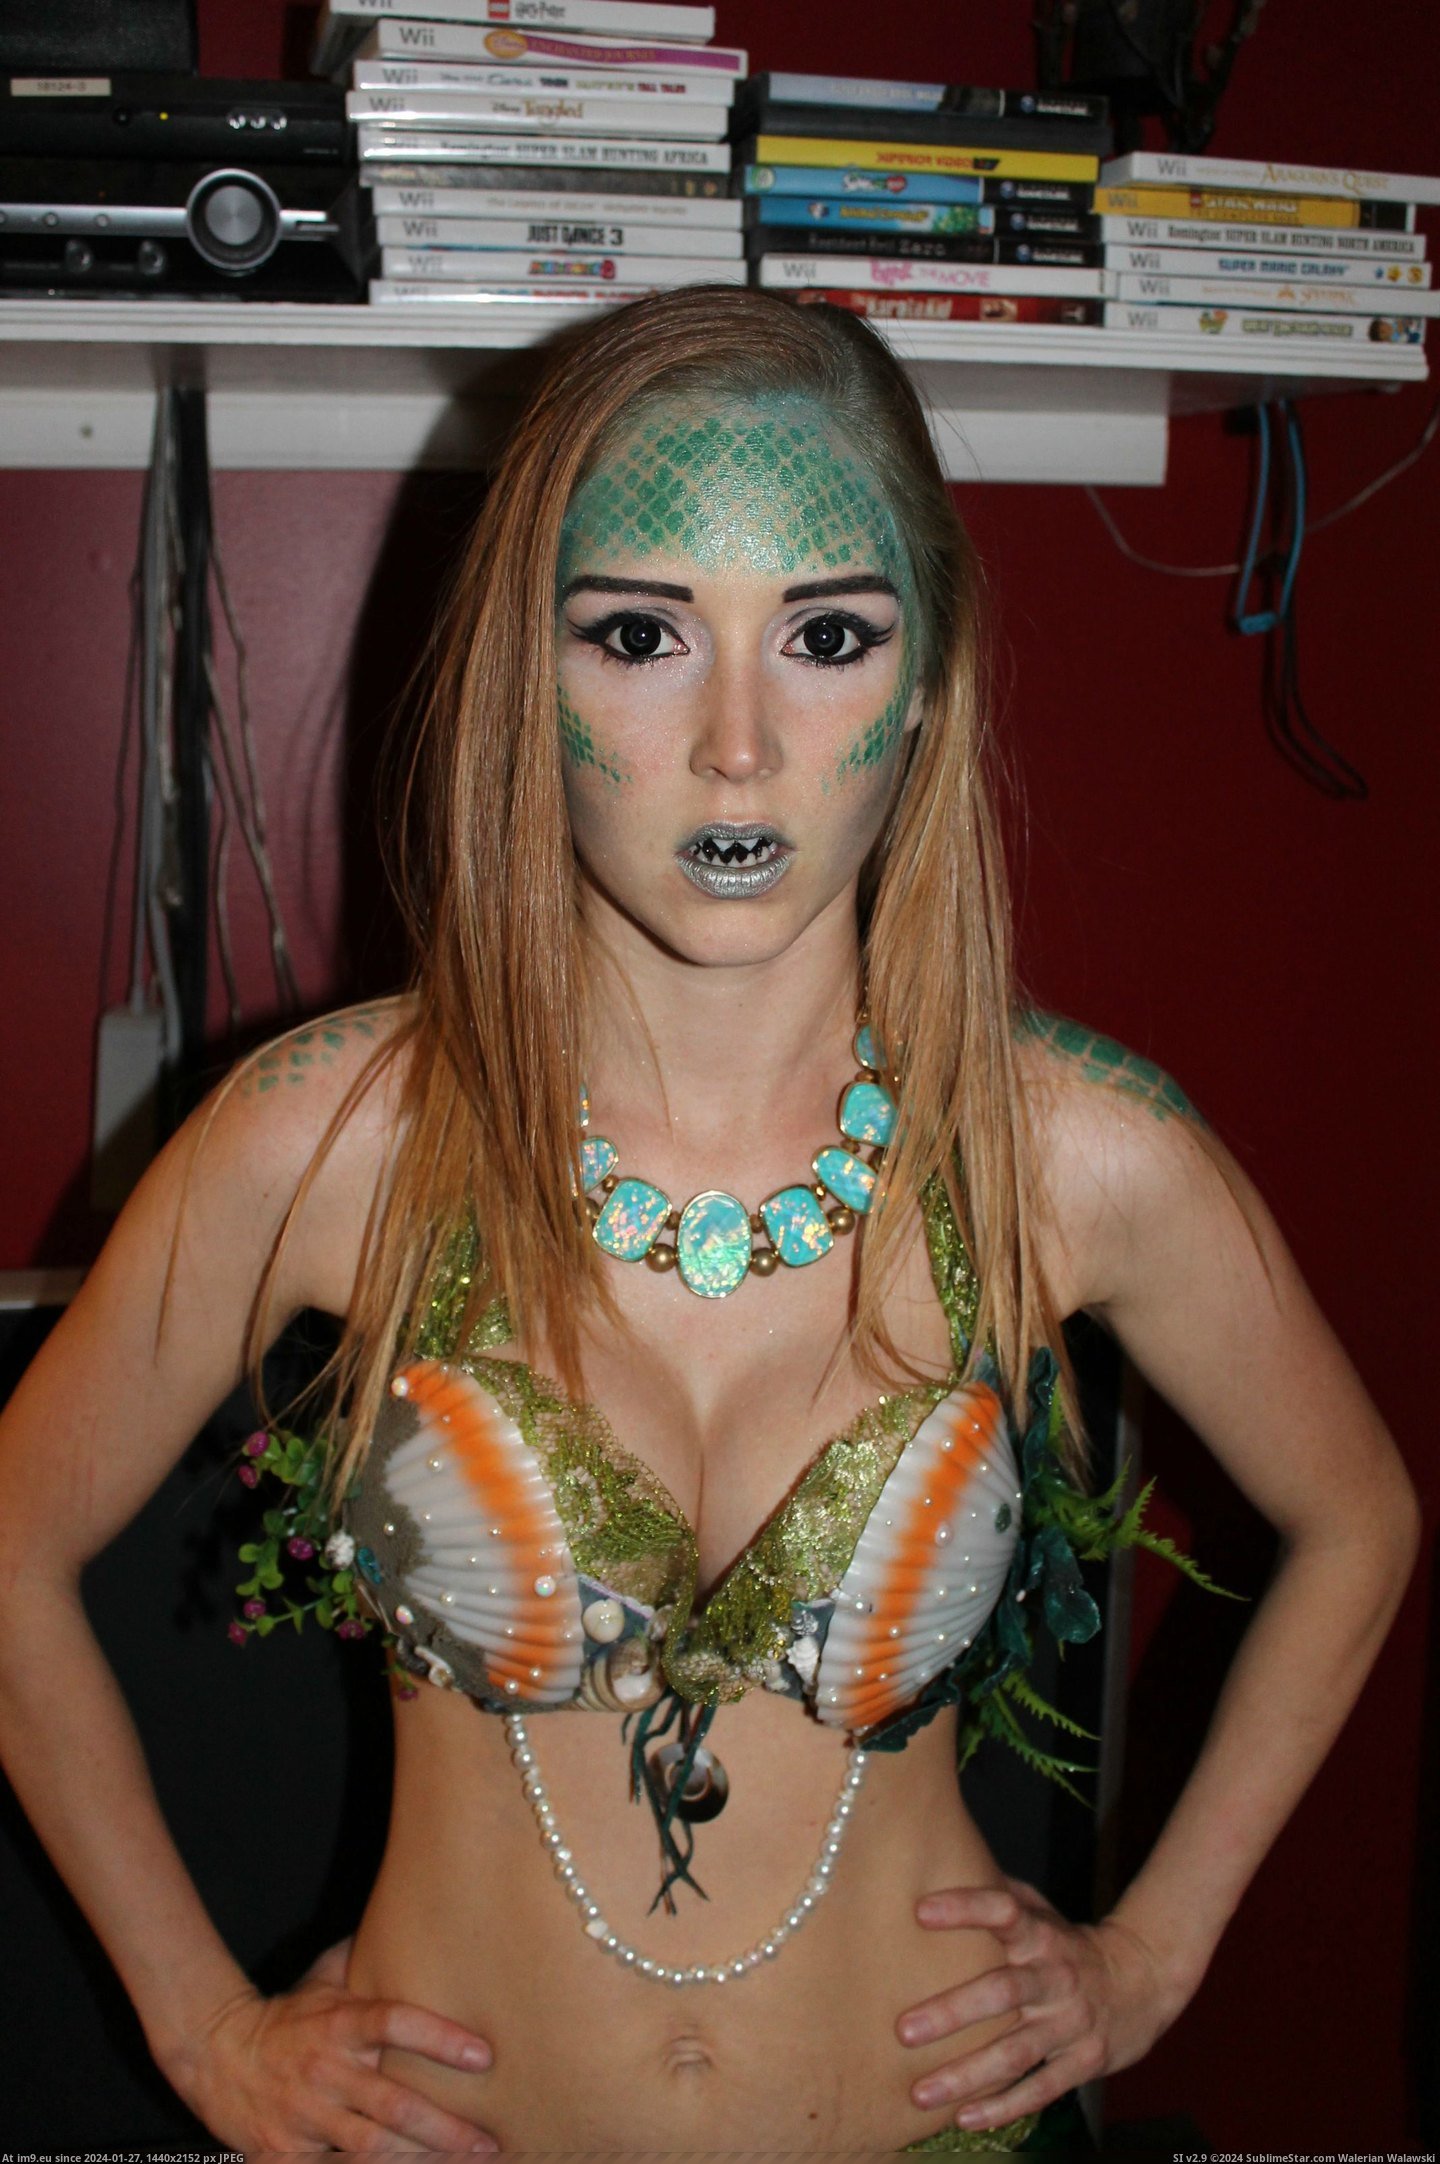 #Costume #Homemade #Mermaid [Pics] My homemade mermaid costume! 4 Pic. (Obraz z album My r/PICS favs))